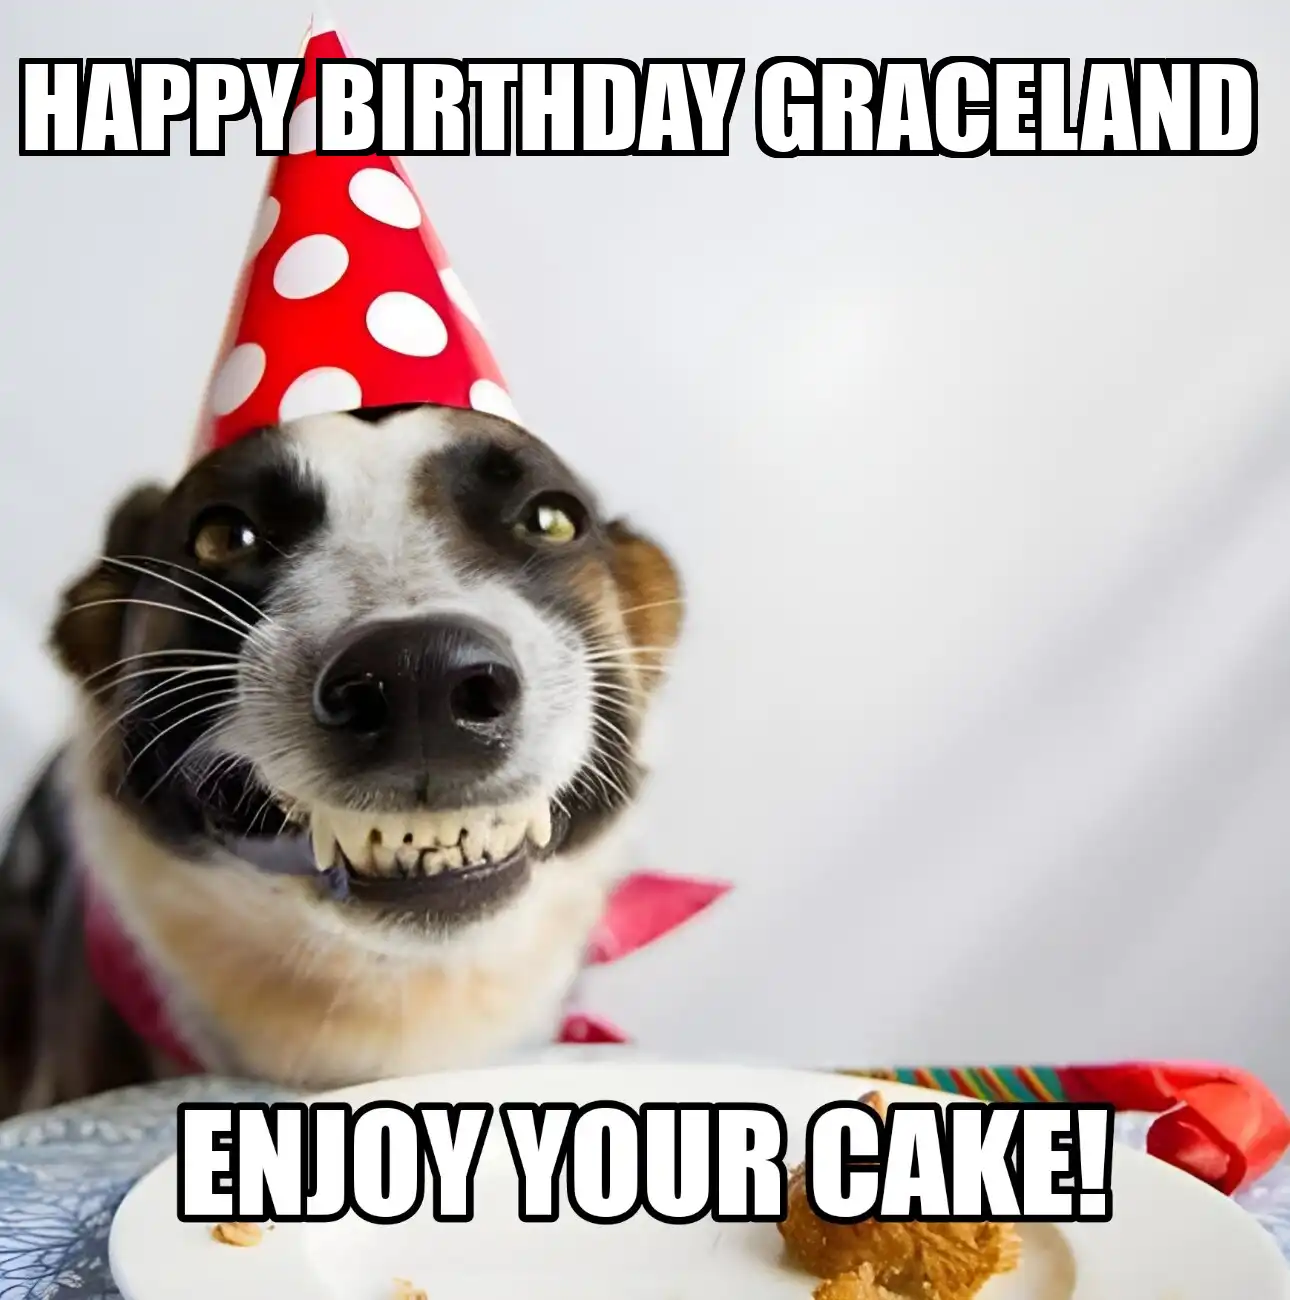 Happy Birthday Graceland Enjoy Your Cake Dog Meme